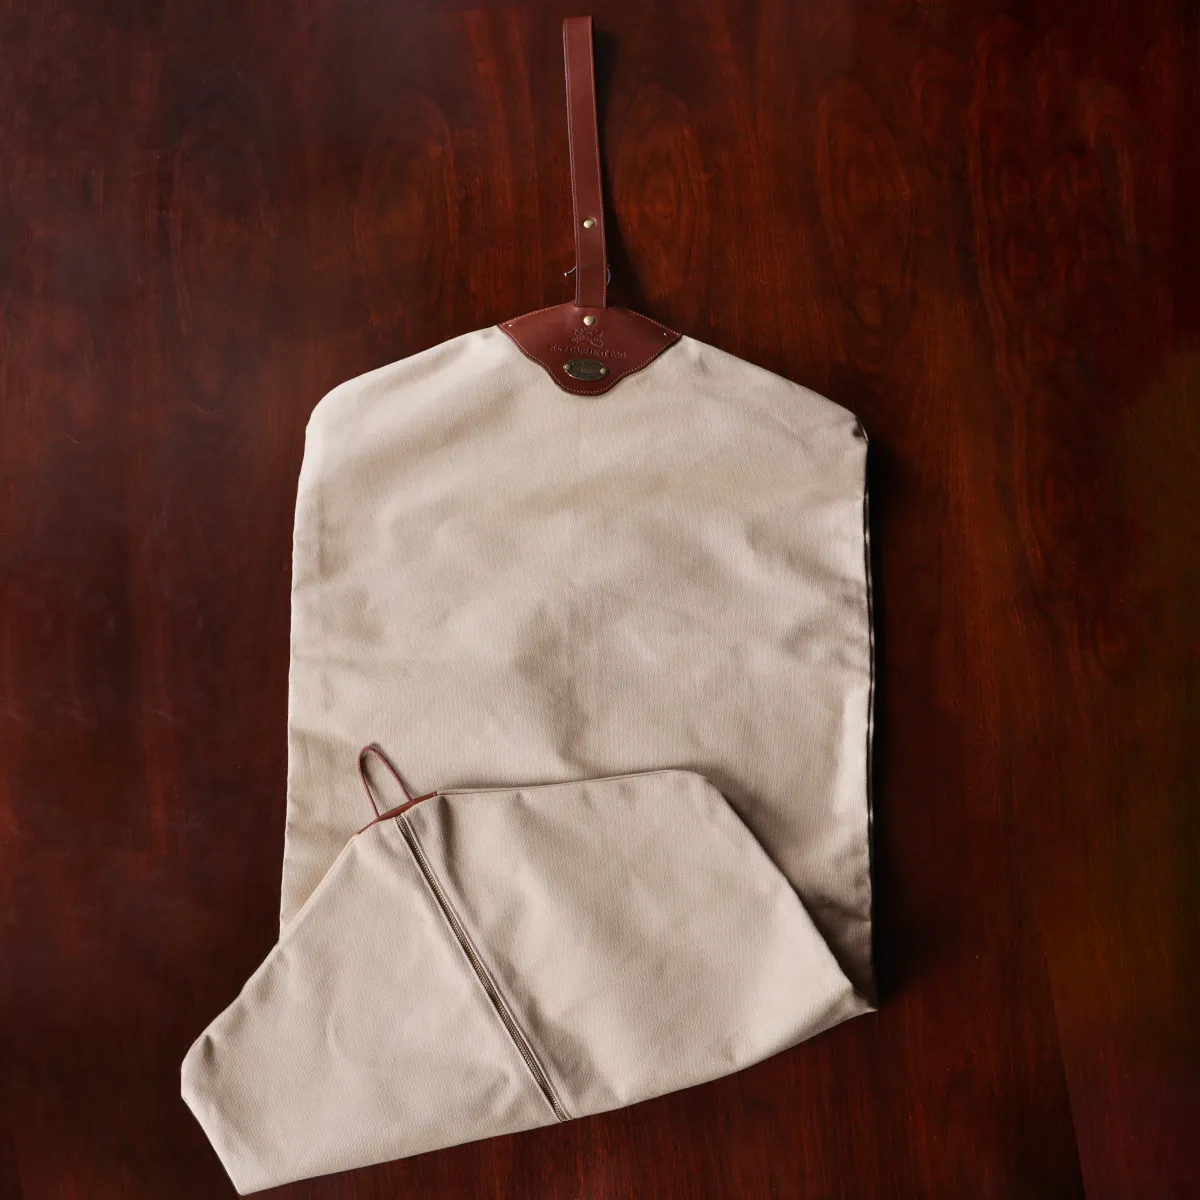 Canvas Garment Bag, No. 7 - Sturdy No. 8 Khaki Cotton Canvas - Full-Grain Brown Leather Trim - Unisex - USA Made by Col. Littleton - 46 1/2 x 22 1/2